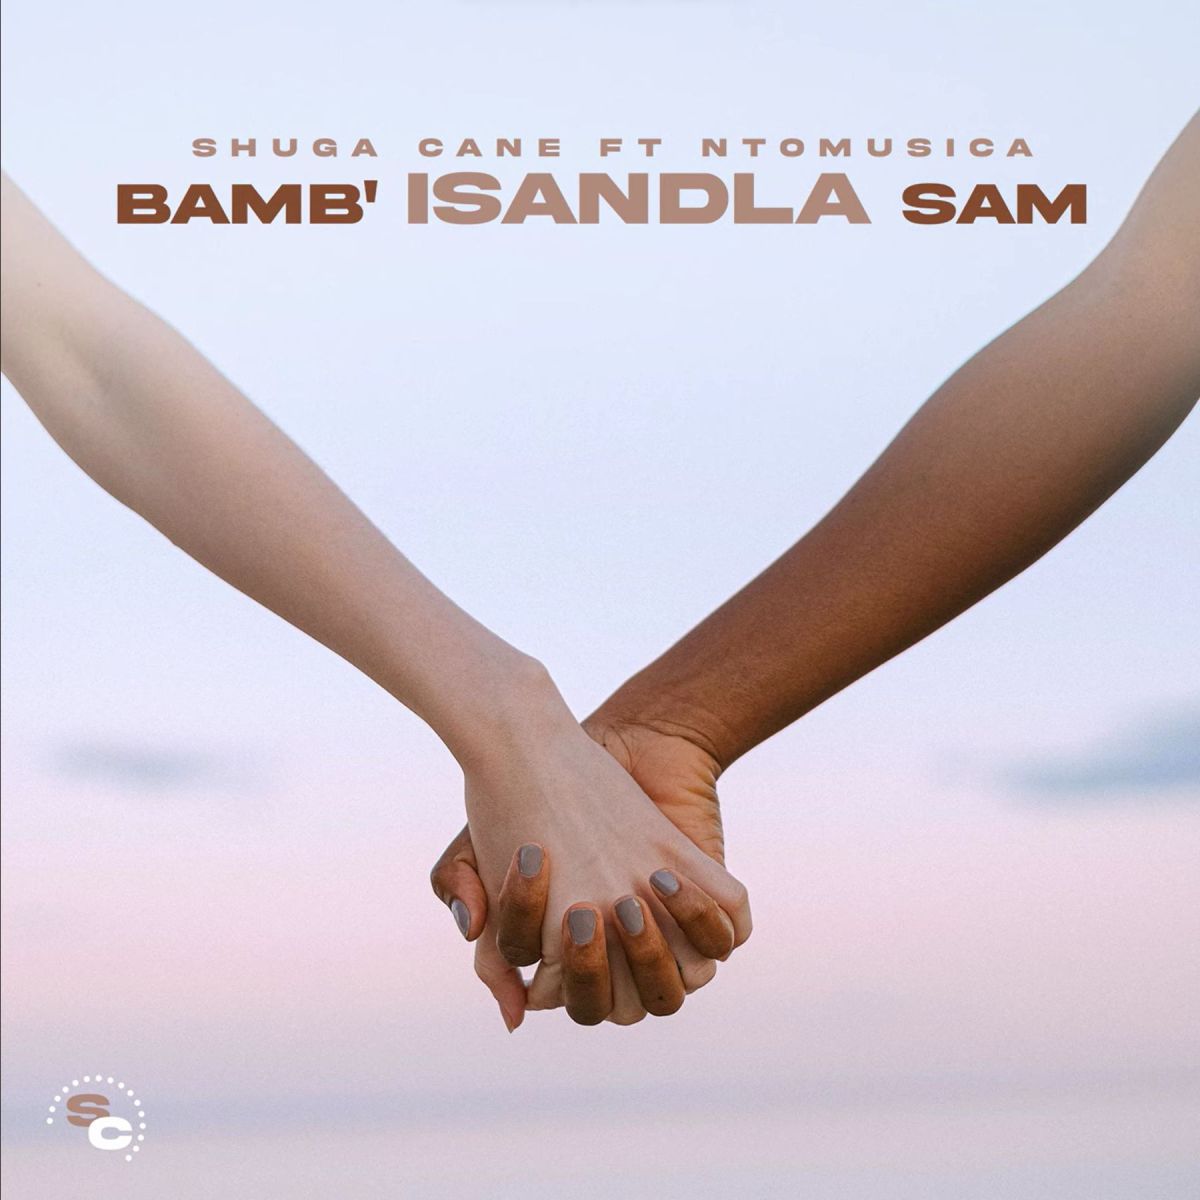 Shuga Cane – Bamb’isandla Sam Ft. Ntomusica 1